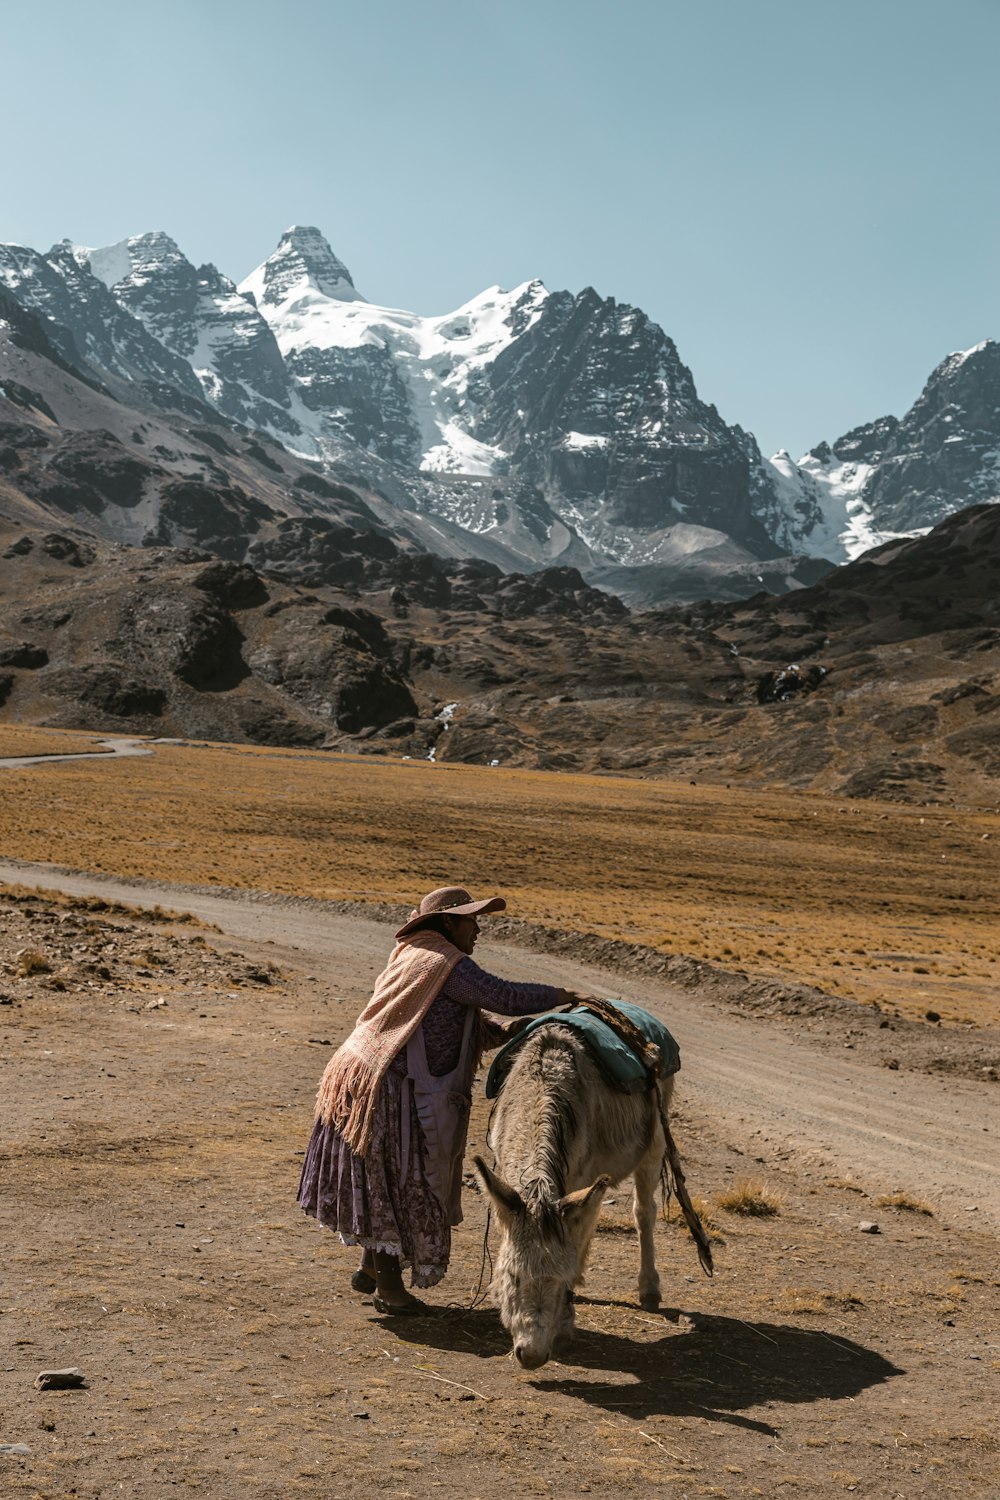 a woman walking a donkey down a dirt road